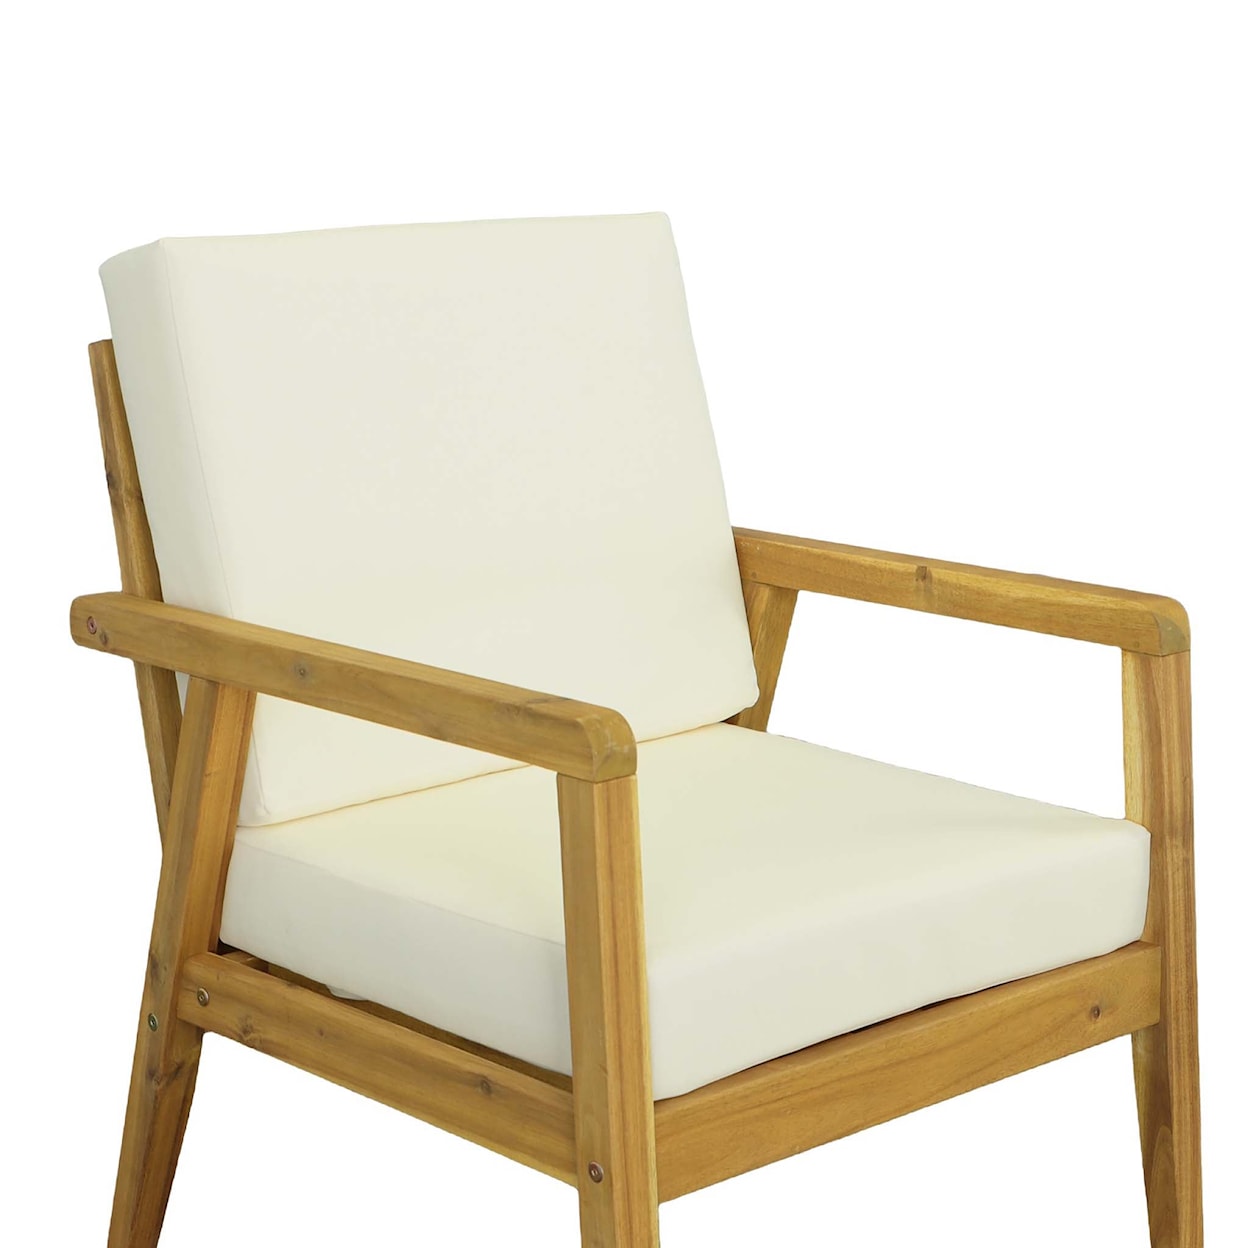 Progressive Furniture Cape Cod Outdoor Seating Set (4 Piece)